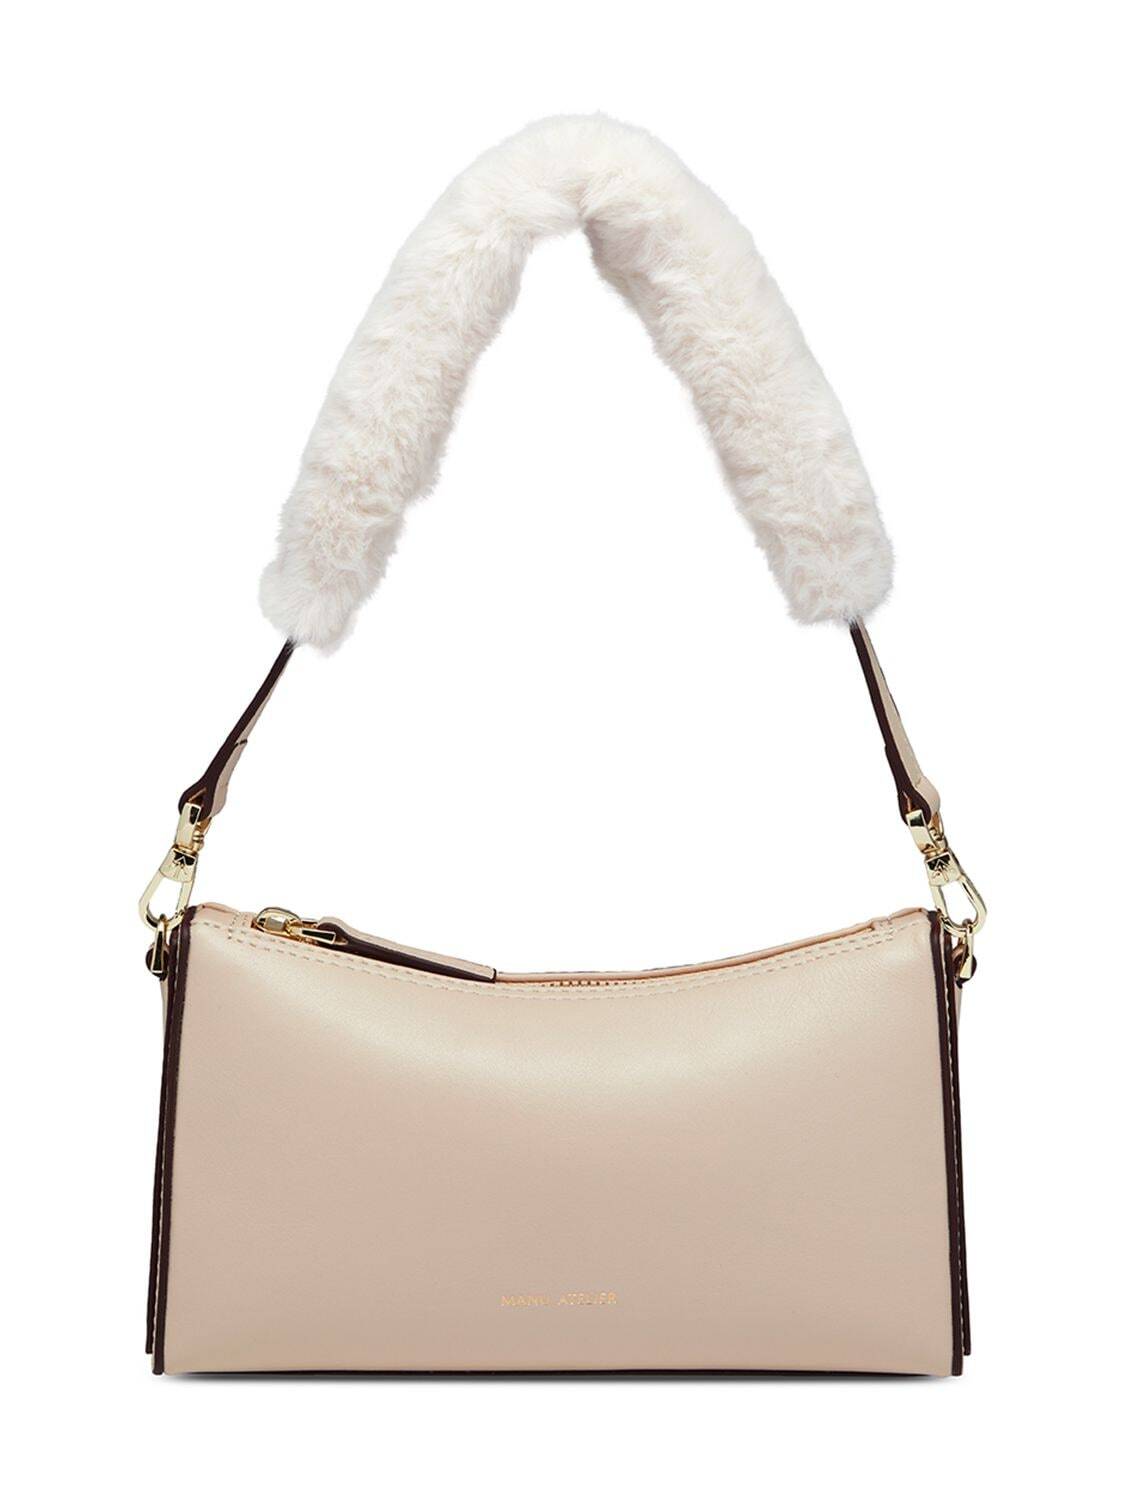 MANU ATELIER Mini Prism Soft Calf Leather Bag in ivory